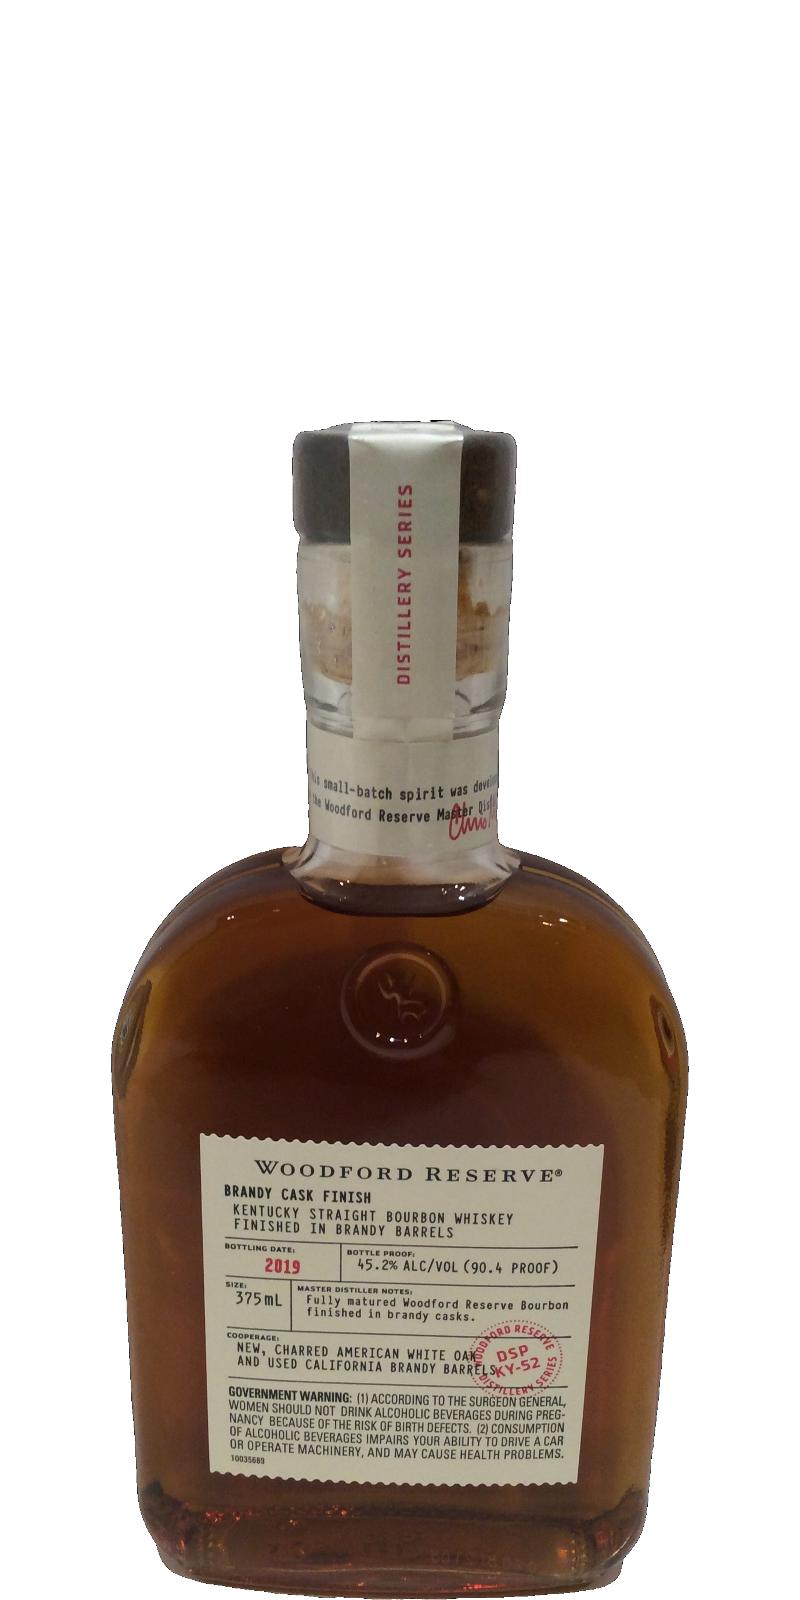 Woodford Reserve Kentucky Straight Bourbon Whisky Brandy Cask Finish 45.2% 375ml